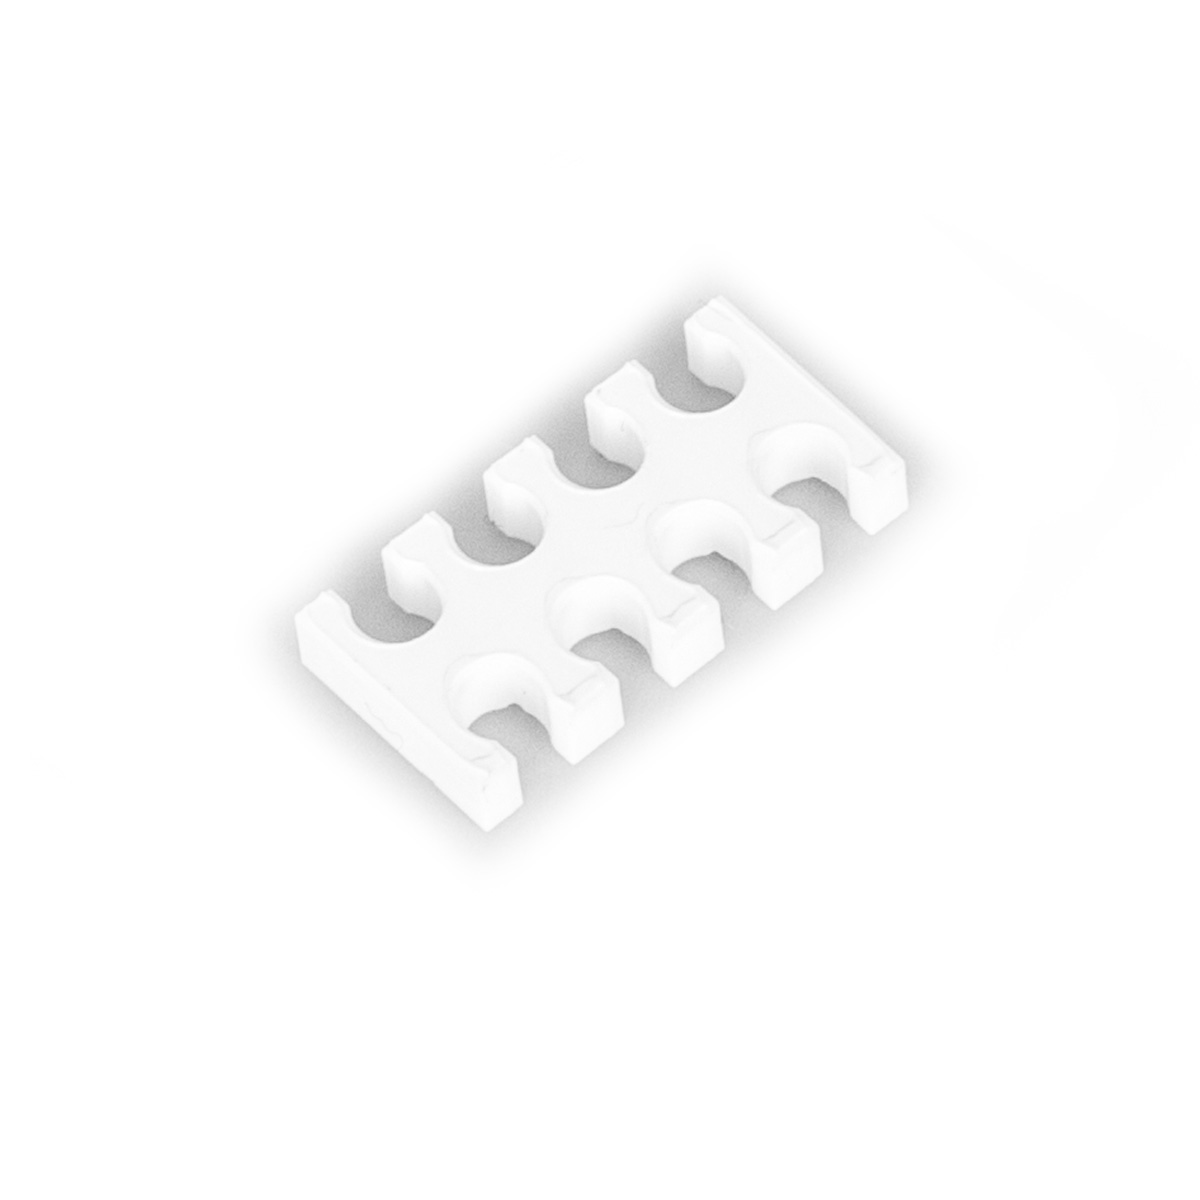 TechForge 8 Slot Cable Comb (Small) 3mm - White